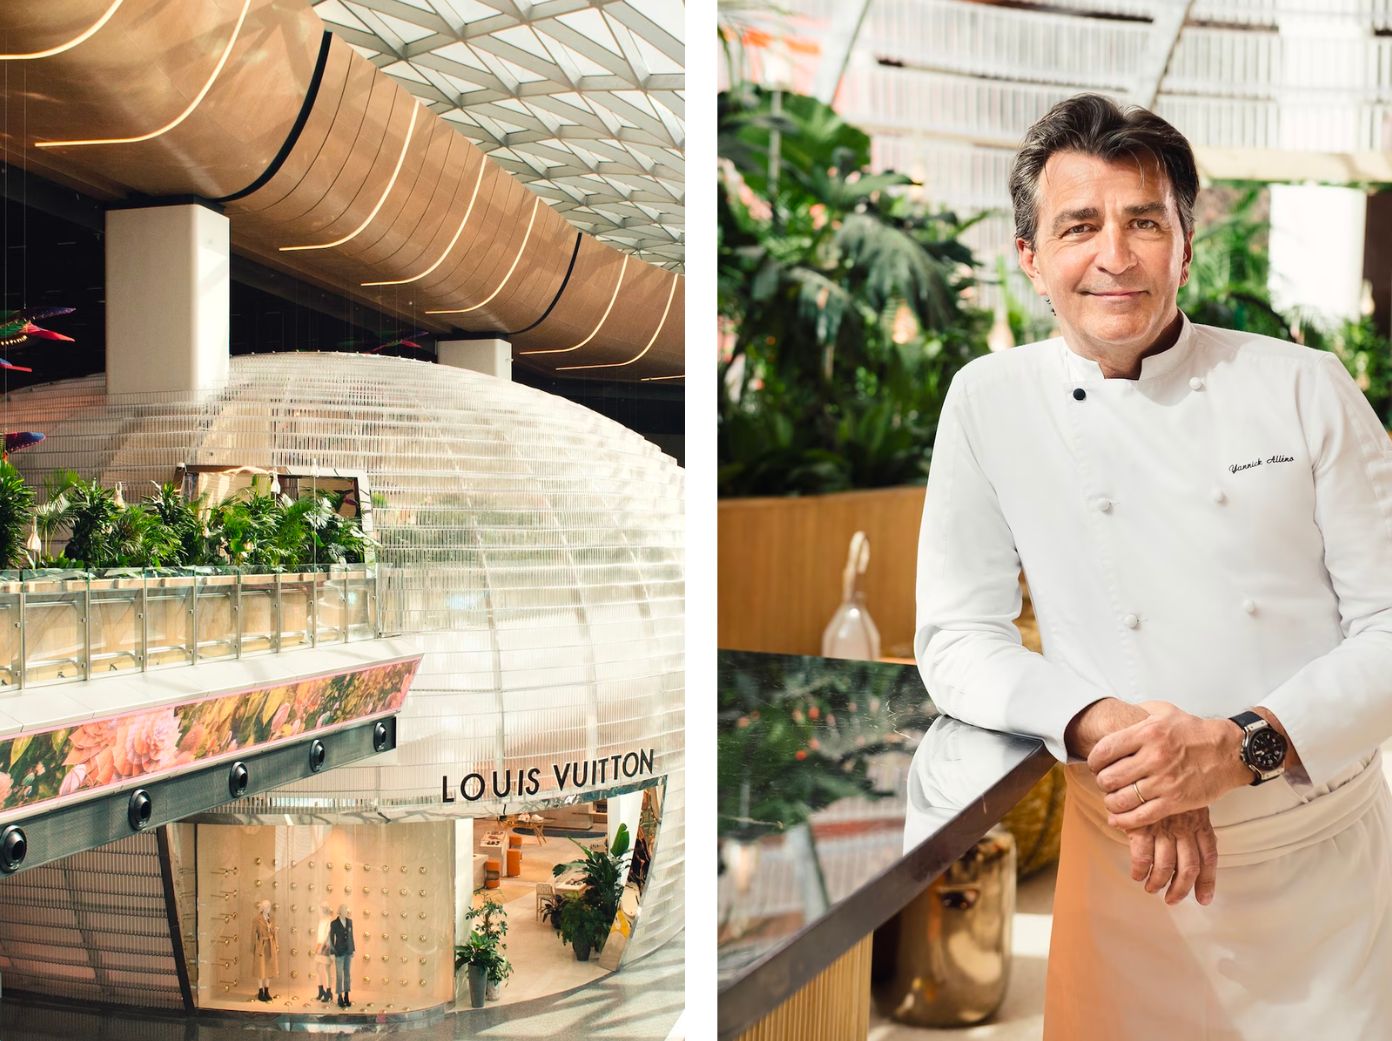 Inside Louis Vuittons New Restaurant - Menu Designed By Michelin